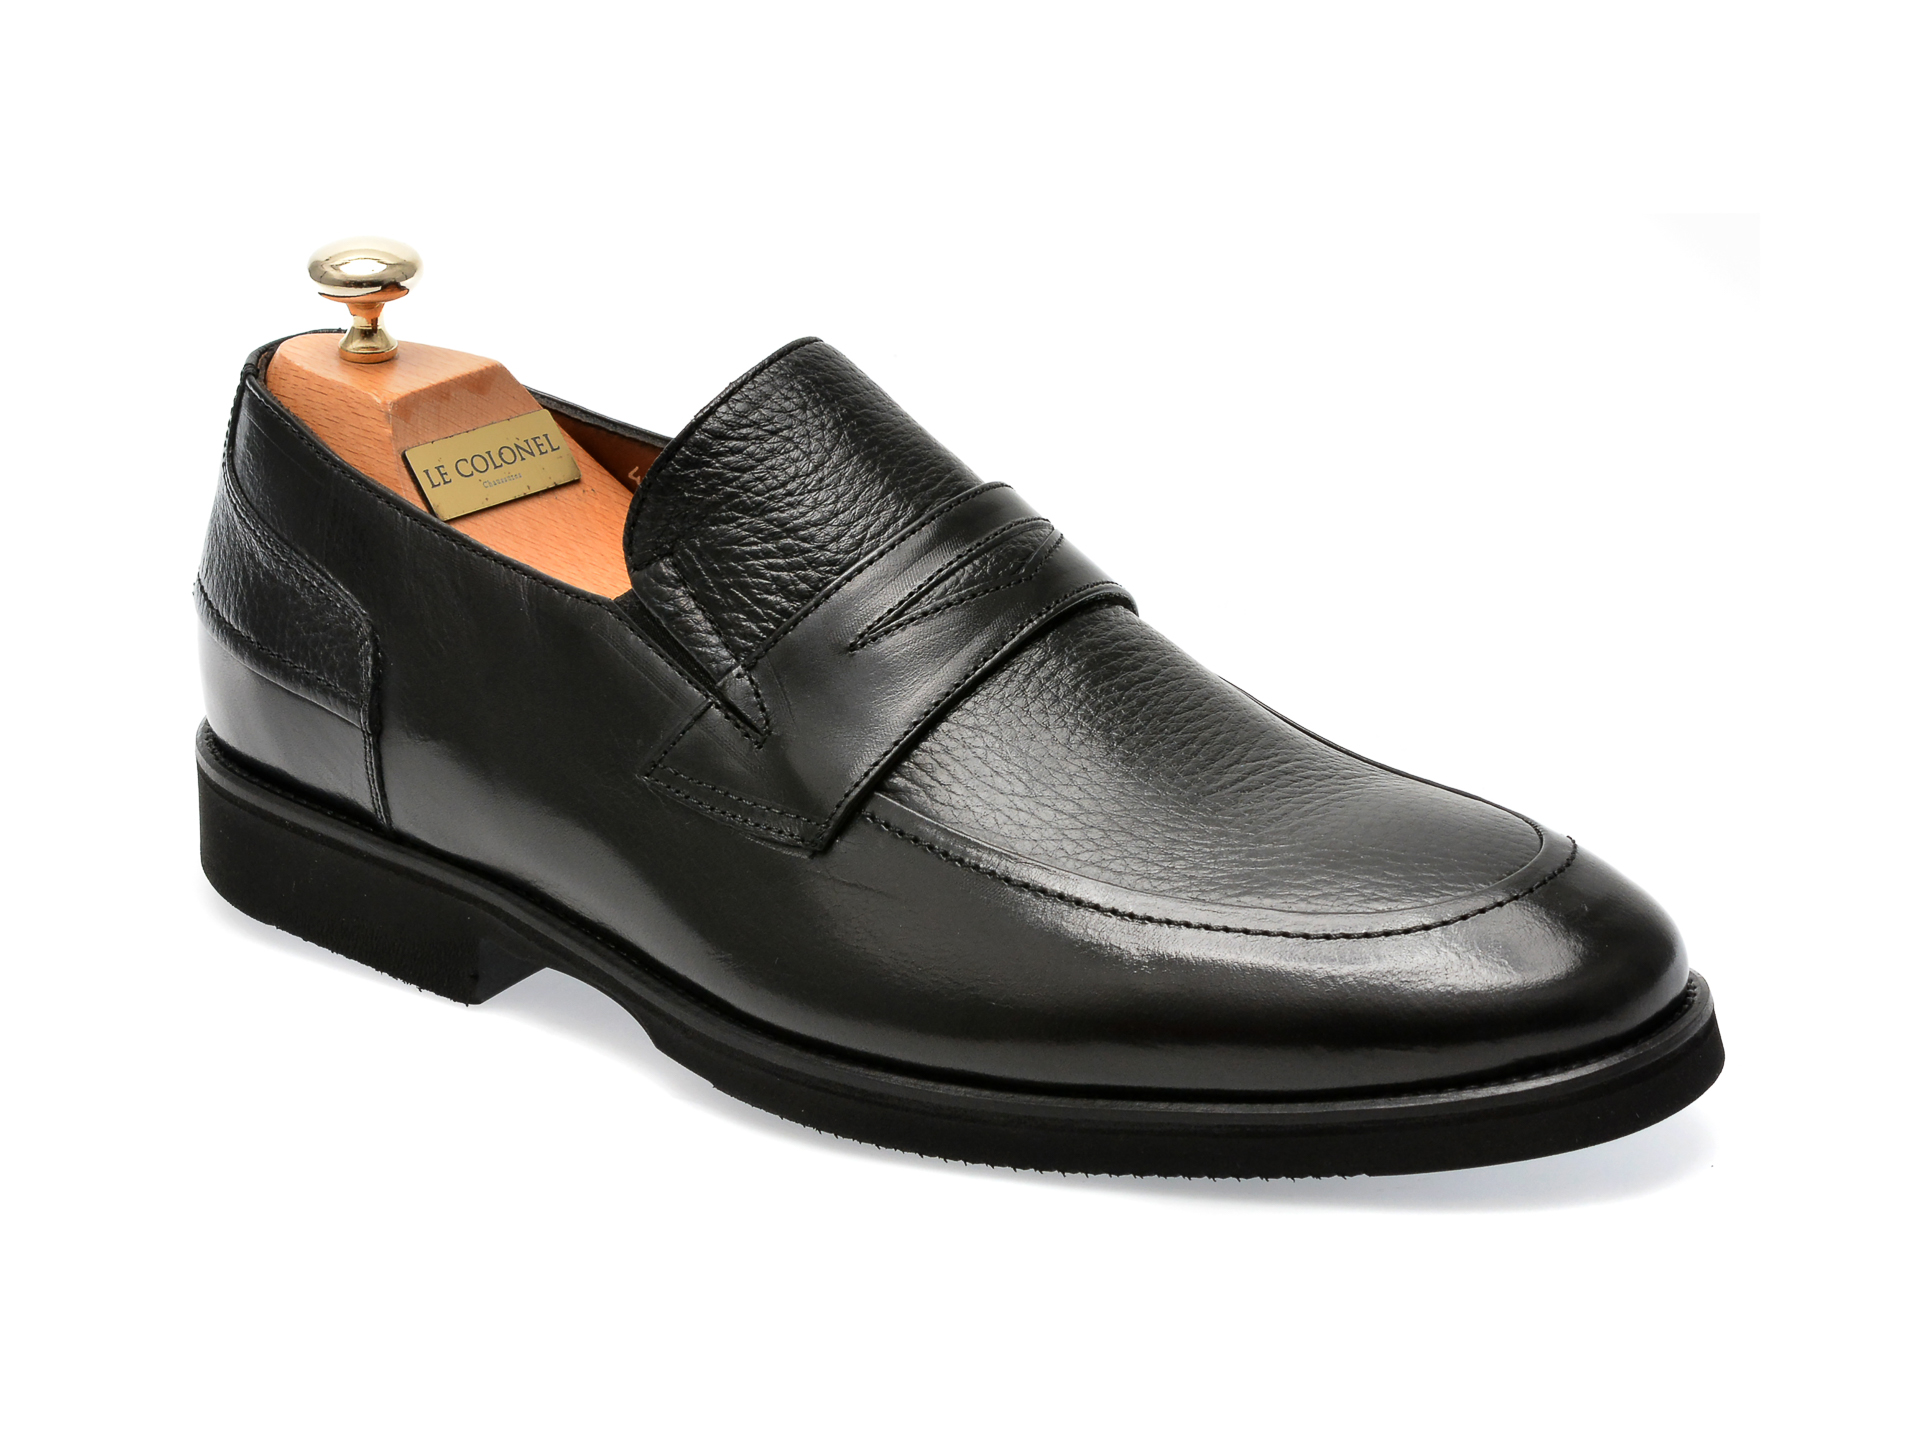 Pantofi LE COLONEL negri, 422104, din piele naturala /barbati/pantofi